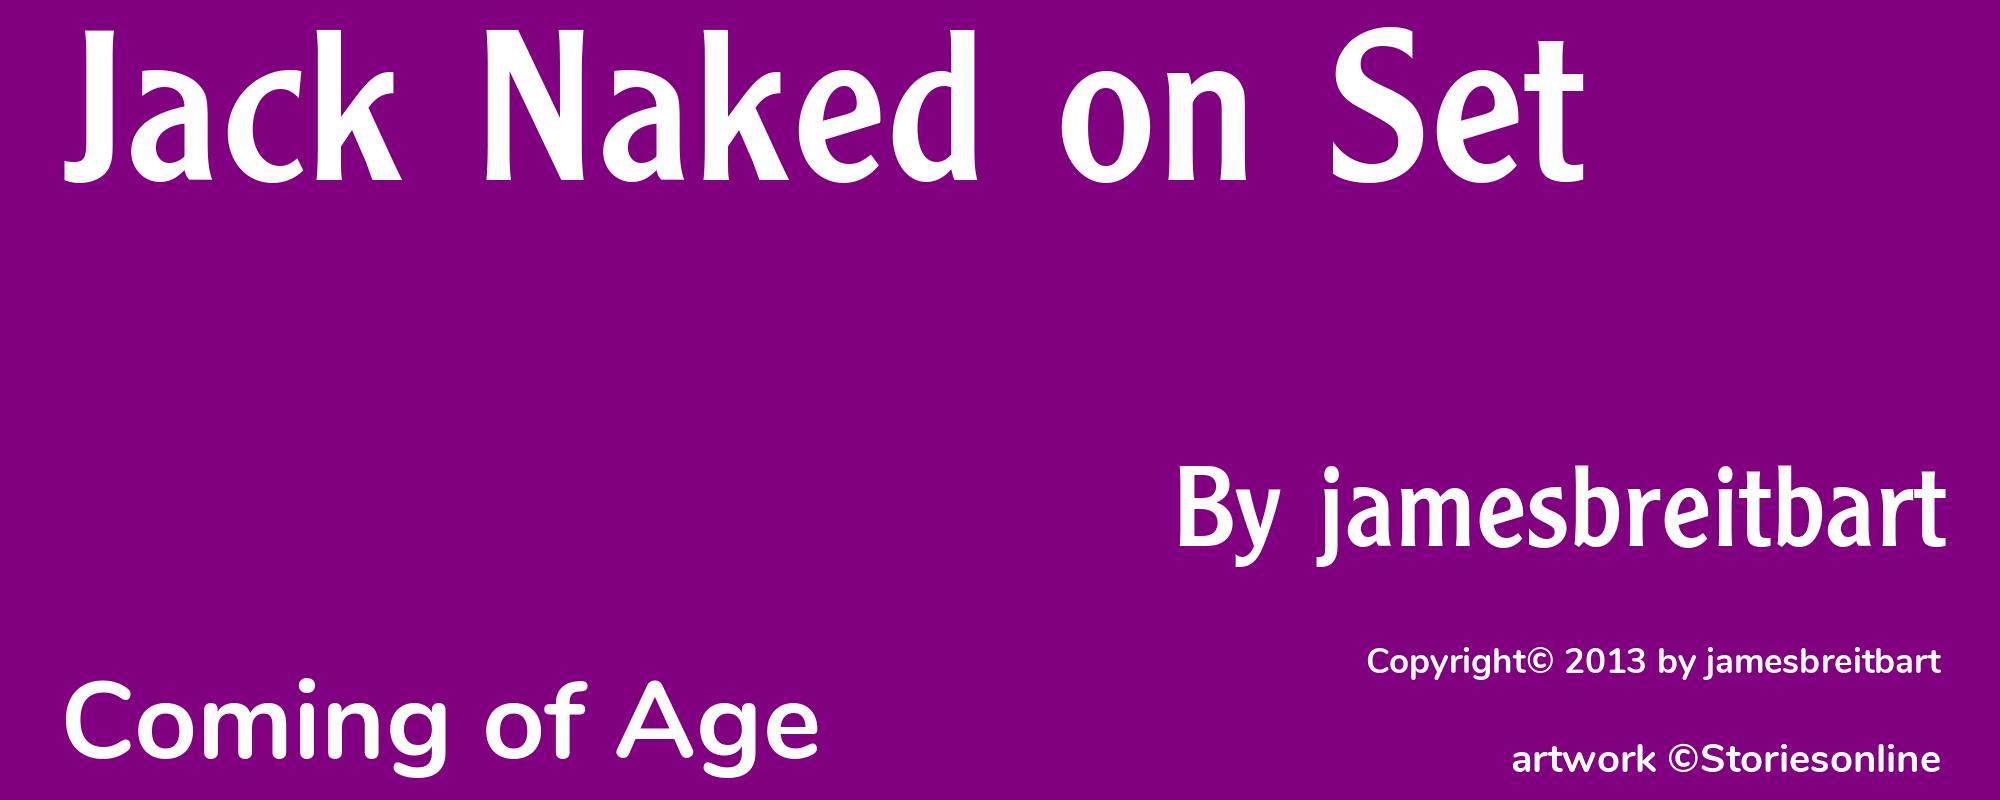 Jack Naked on Set - Cover